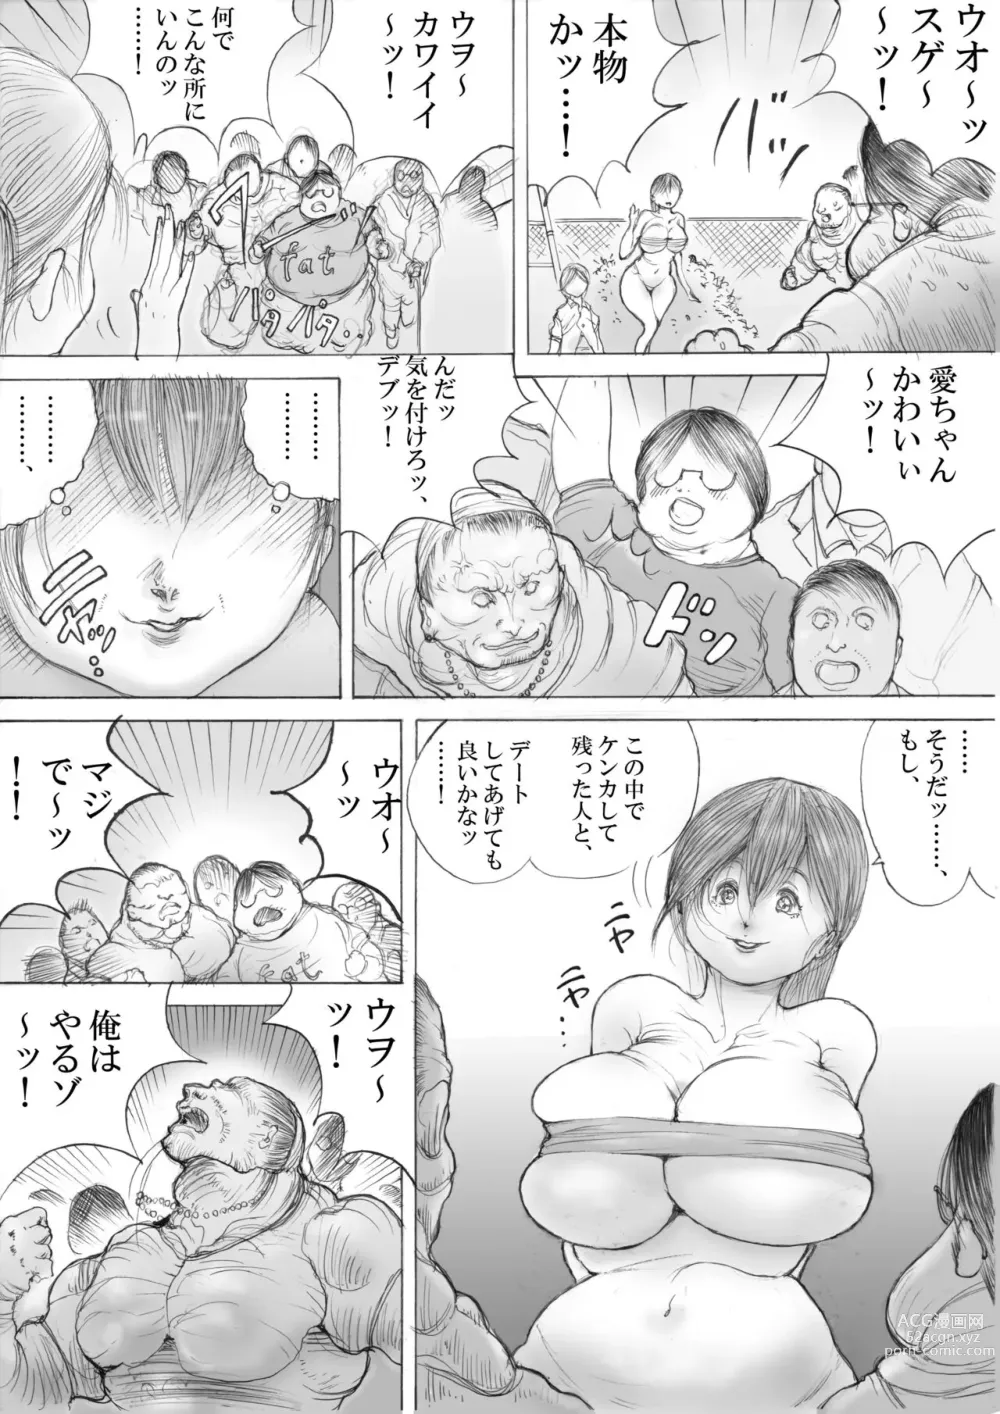 Page 5 of doujinshi Horror Manga 8 (Part 2) Dialogue Changed Version